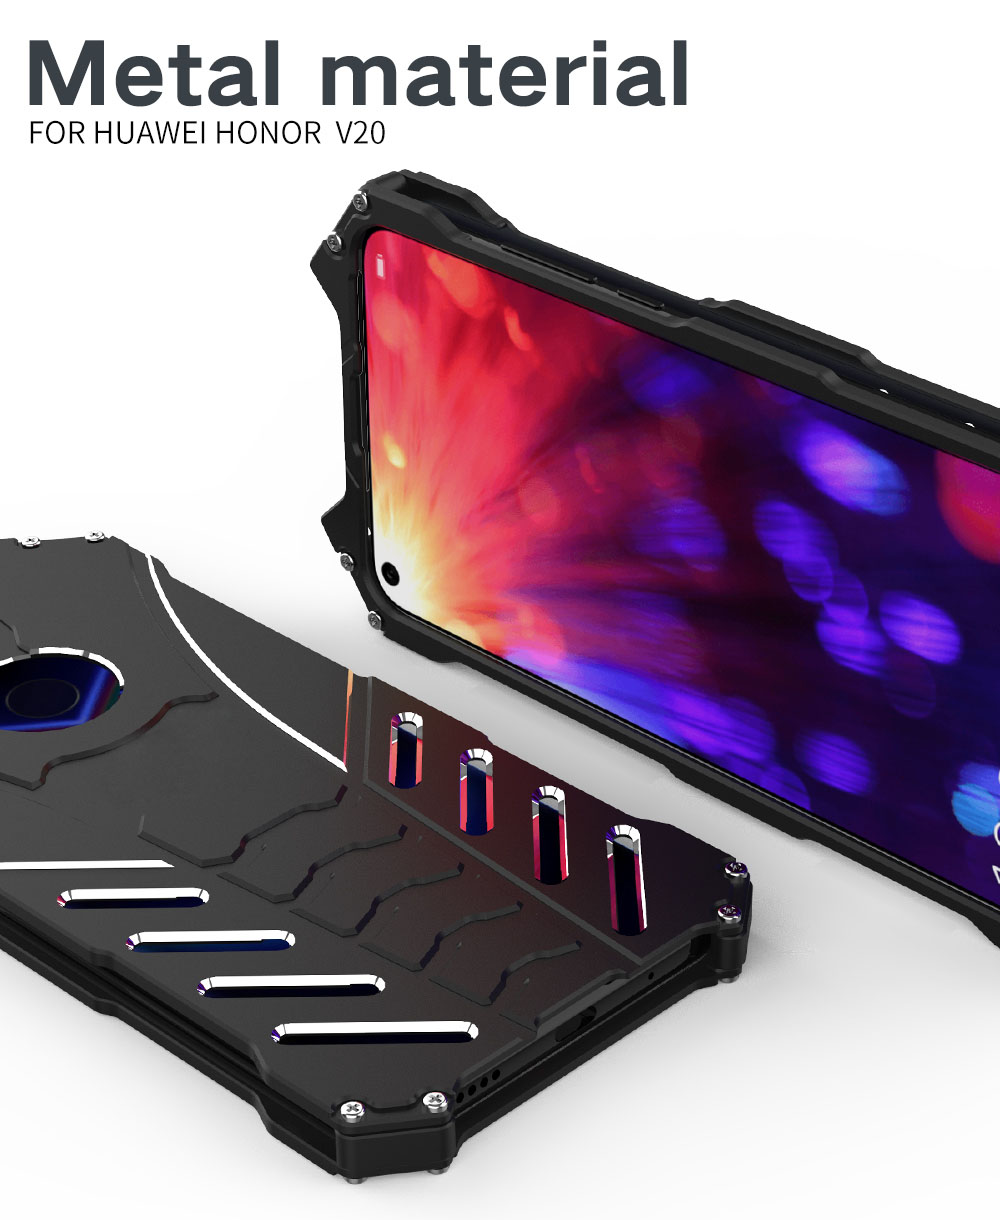 Huawei Honor V20 case